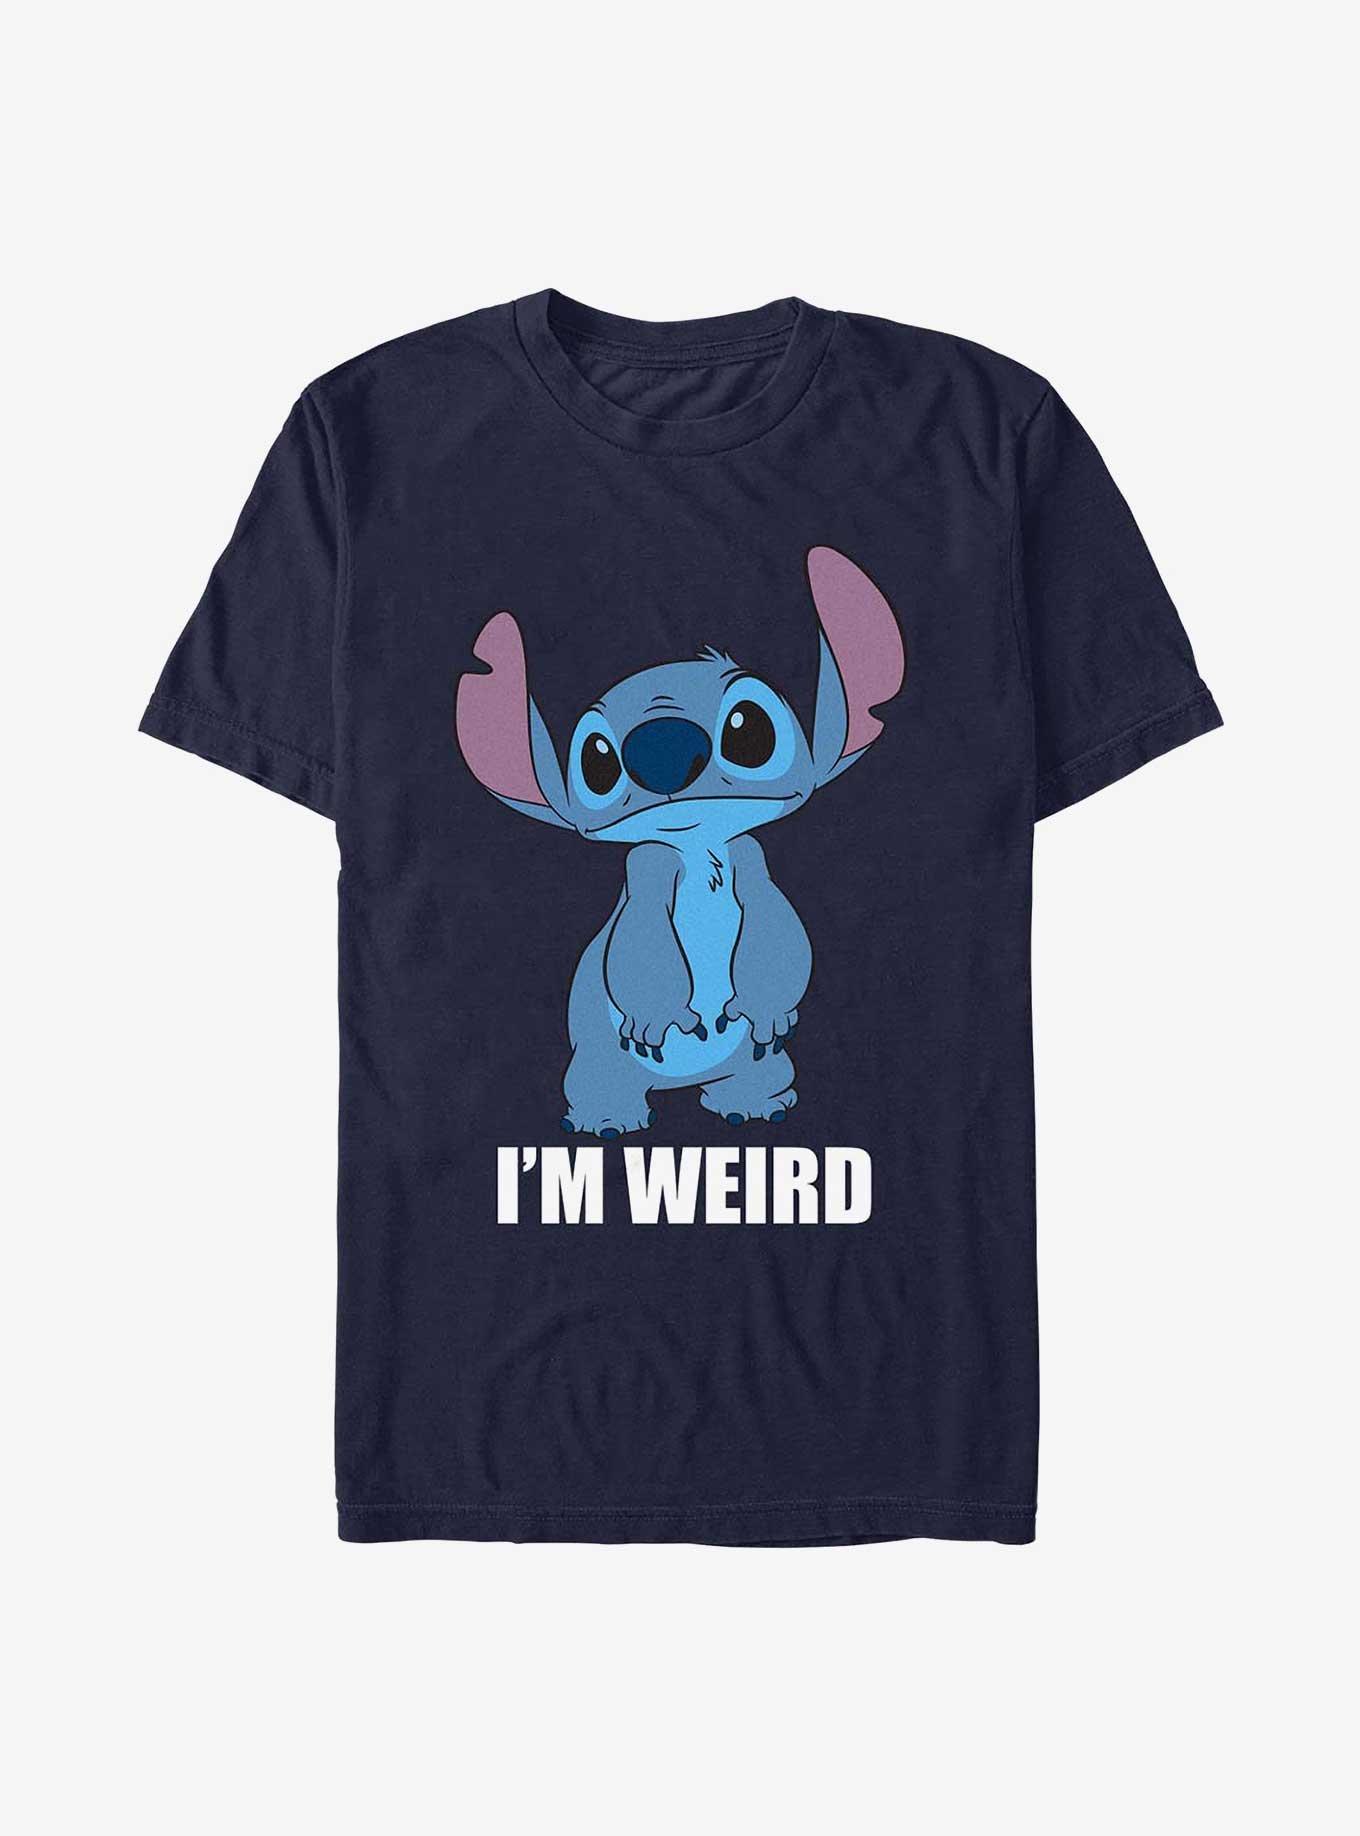 Disney Lilo & Stitch Weird T-Shirt